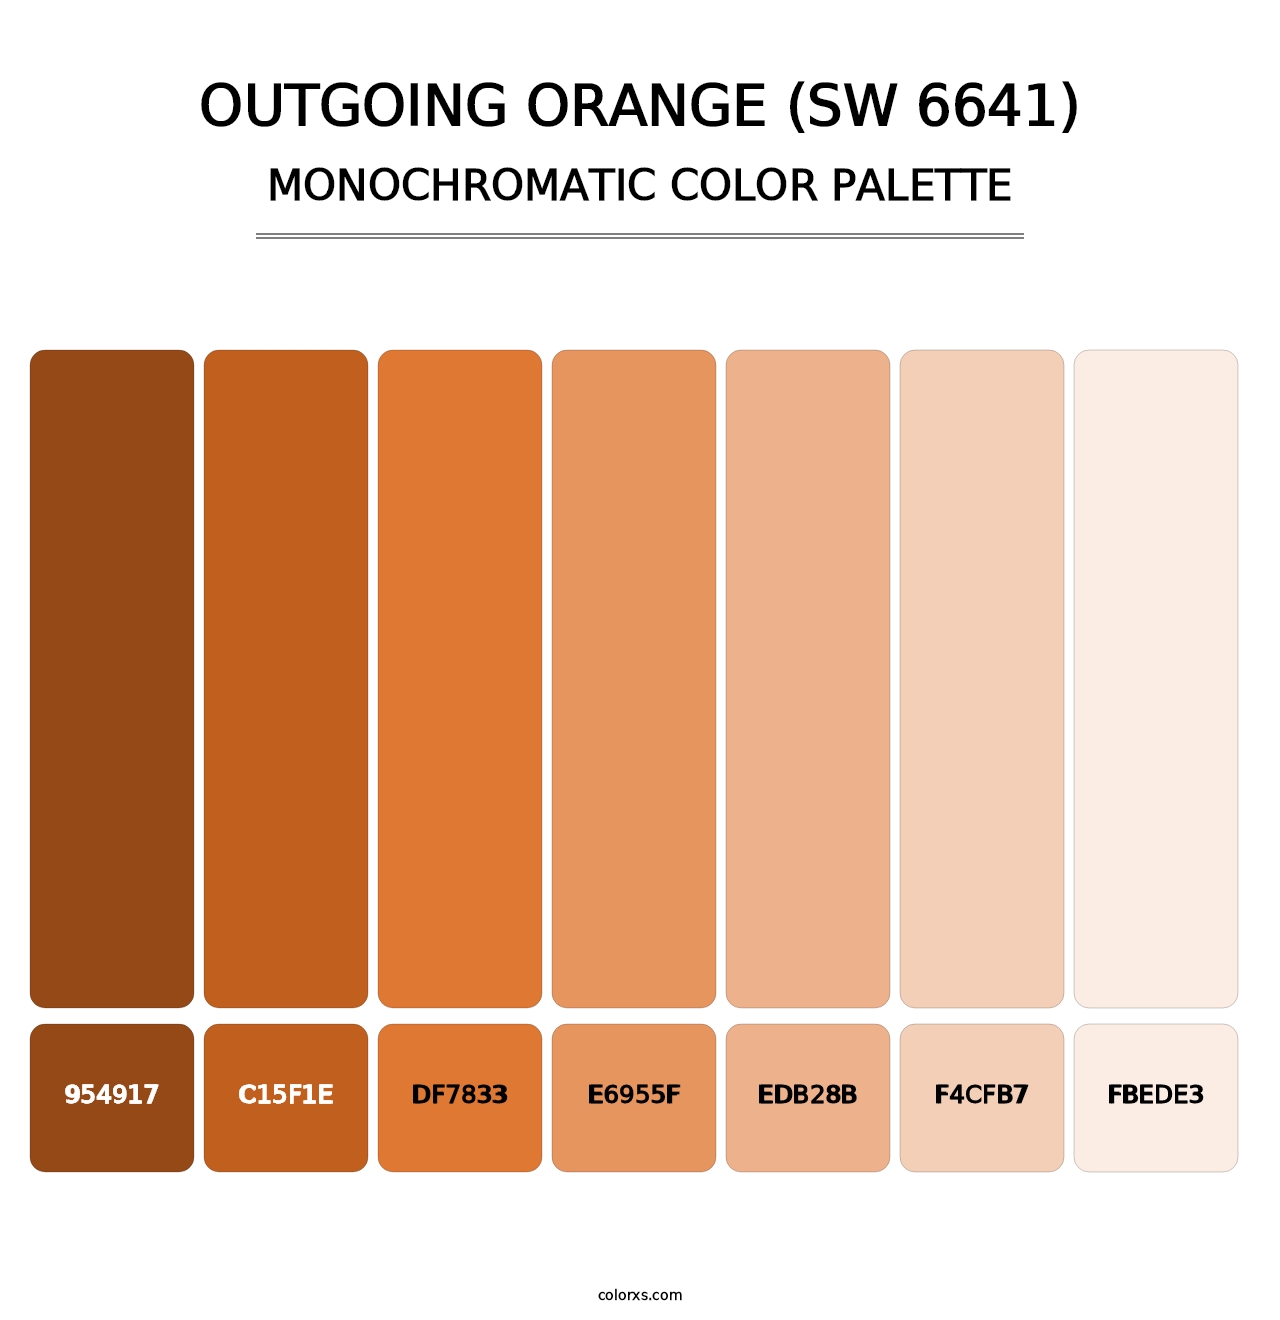 Outgoing Orange (SW 6641) - Monochromatic Color Palette